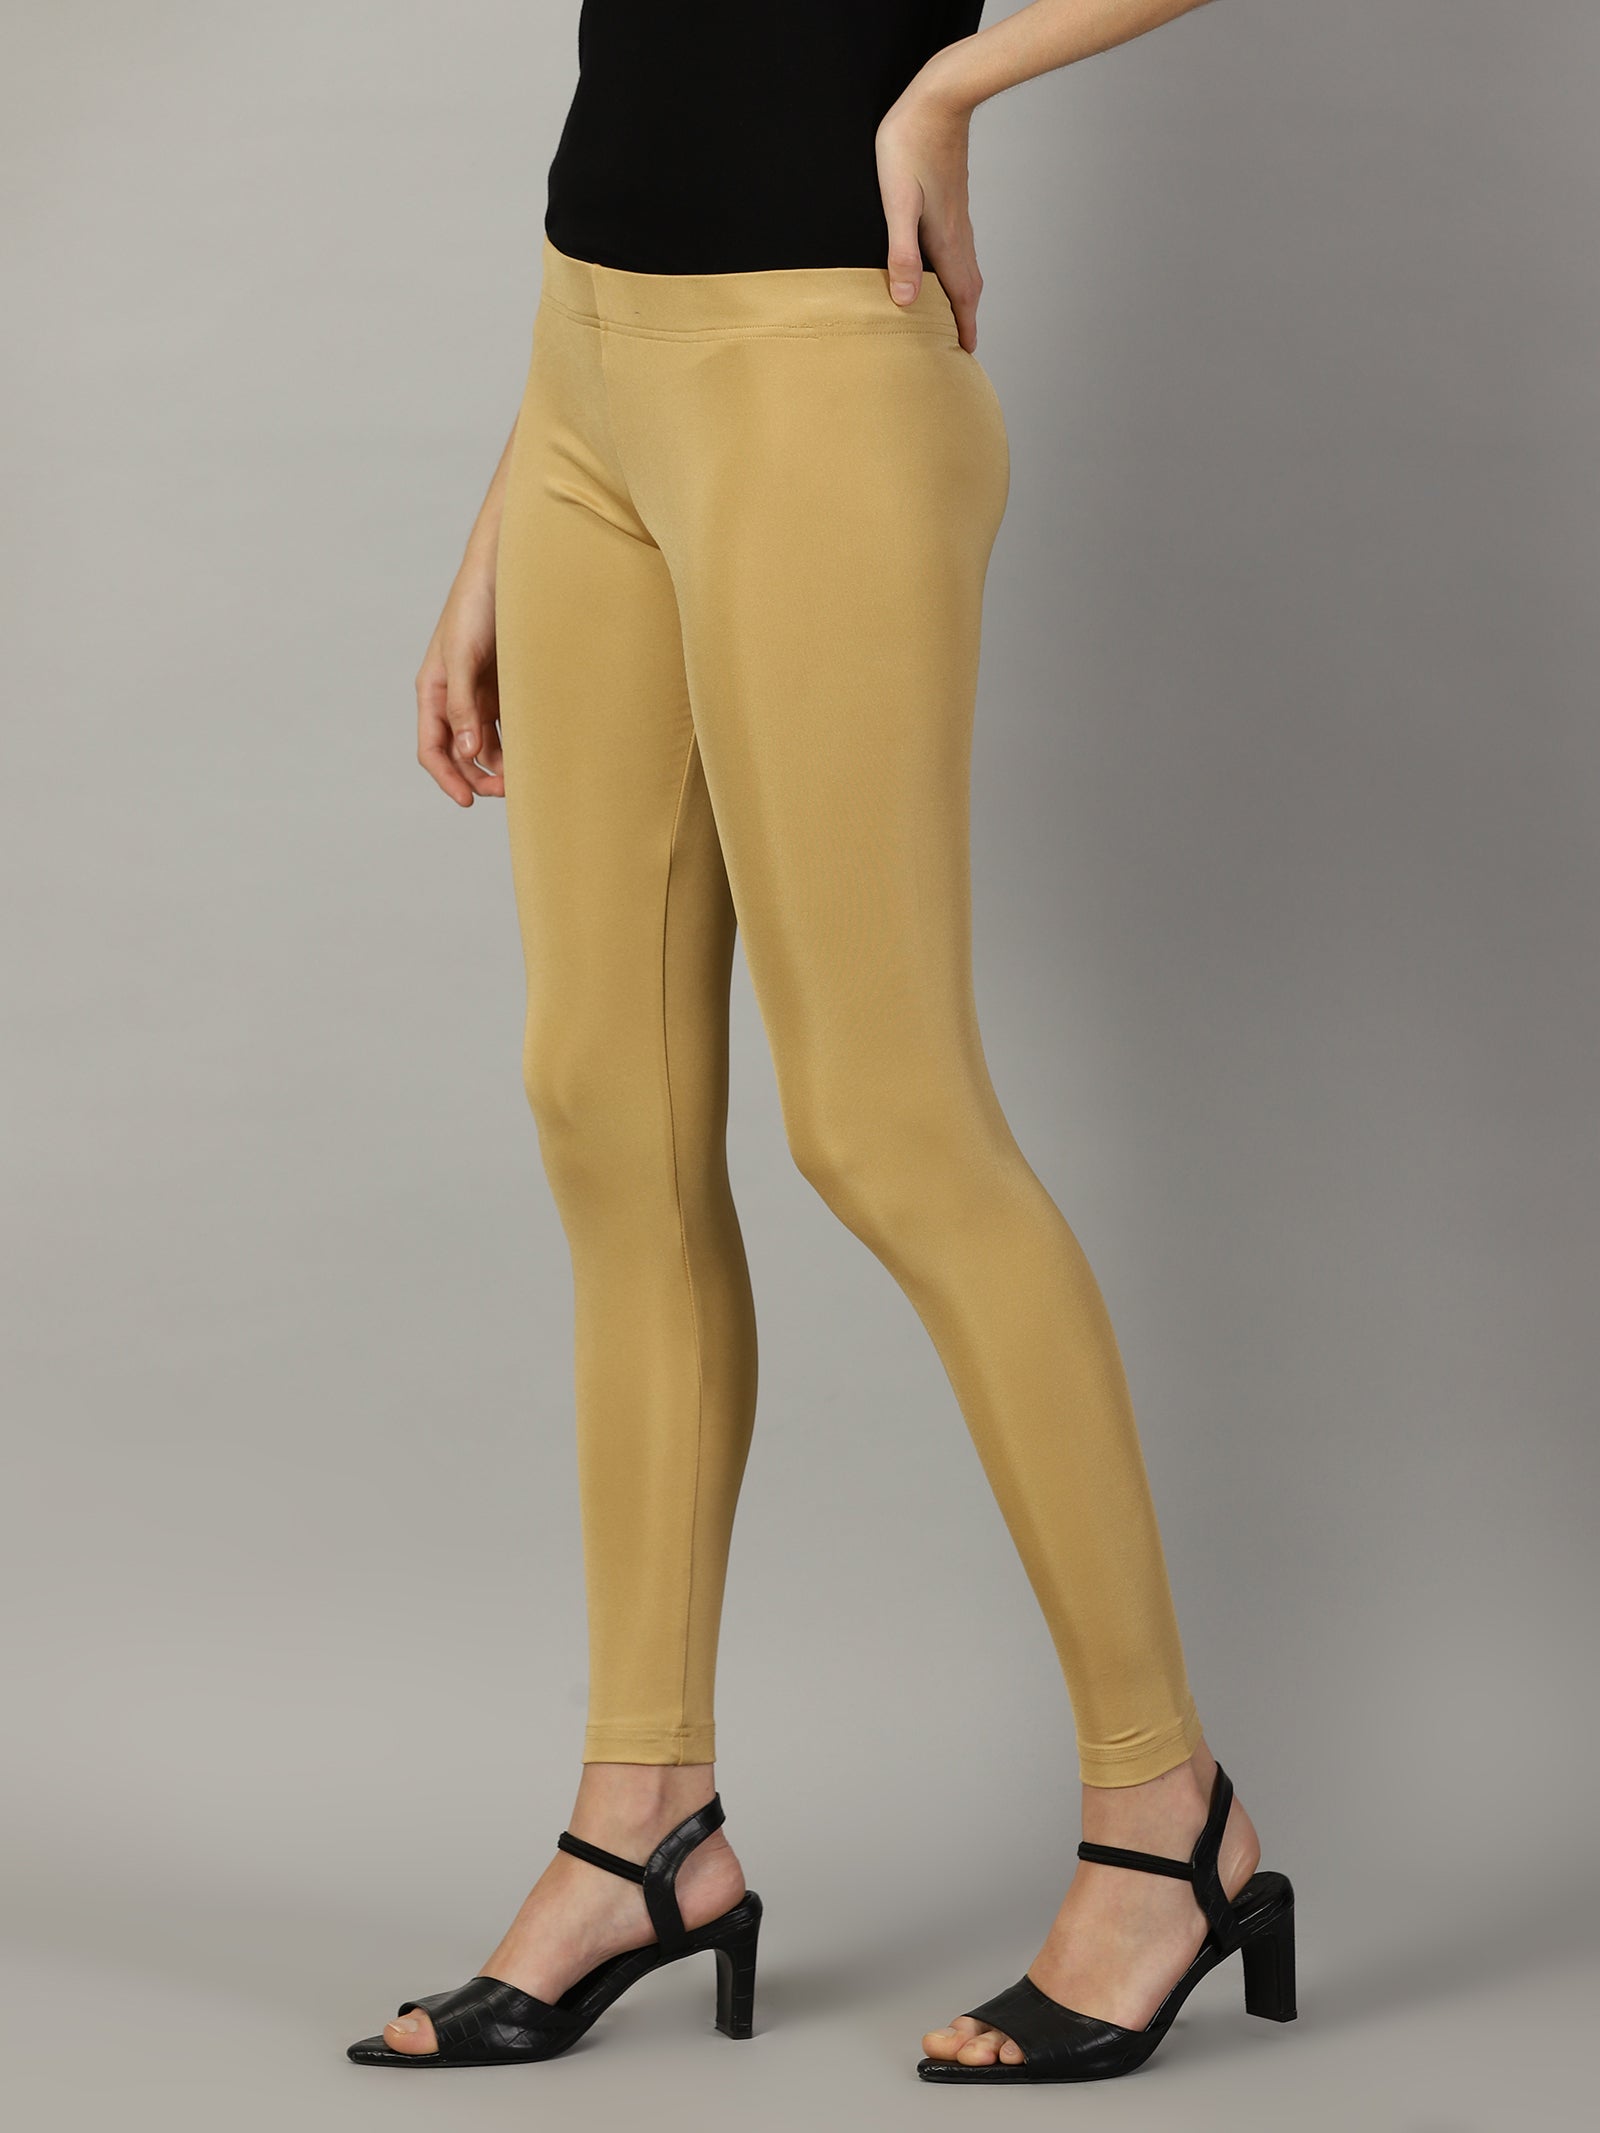 Golden Color Pattern Leggings Women's fitness leggings sports leggings  woman - AliExpress